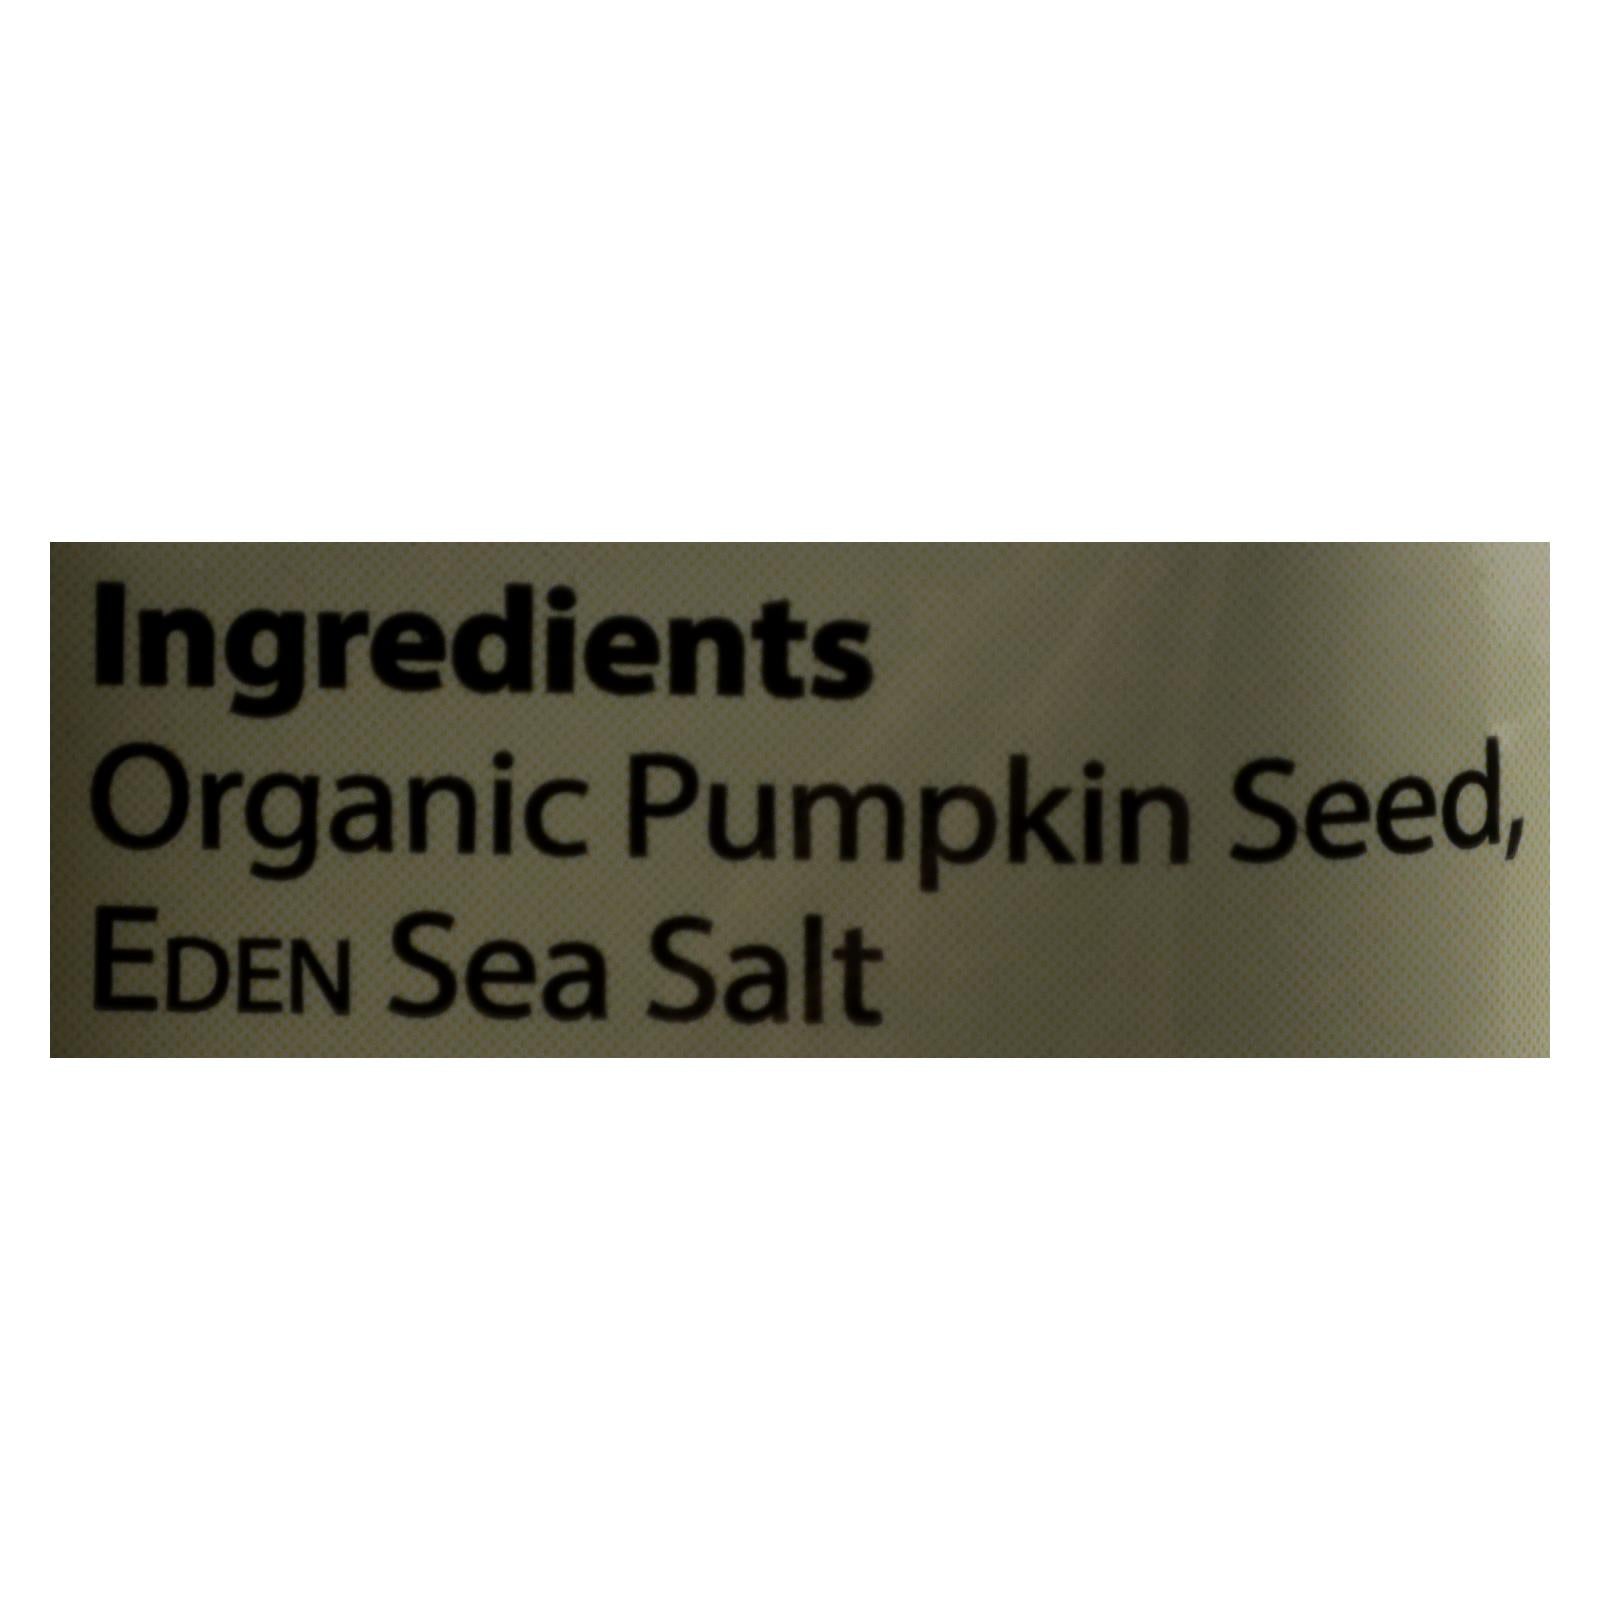 Eden Foods Organic Pocket Snacks - Pumpkin Seeds - Dry Roasted And Salted - 1 Oz - Case Of 12